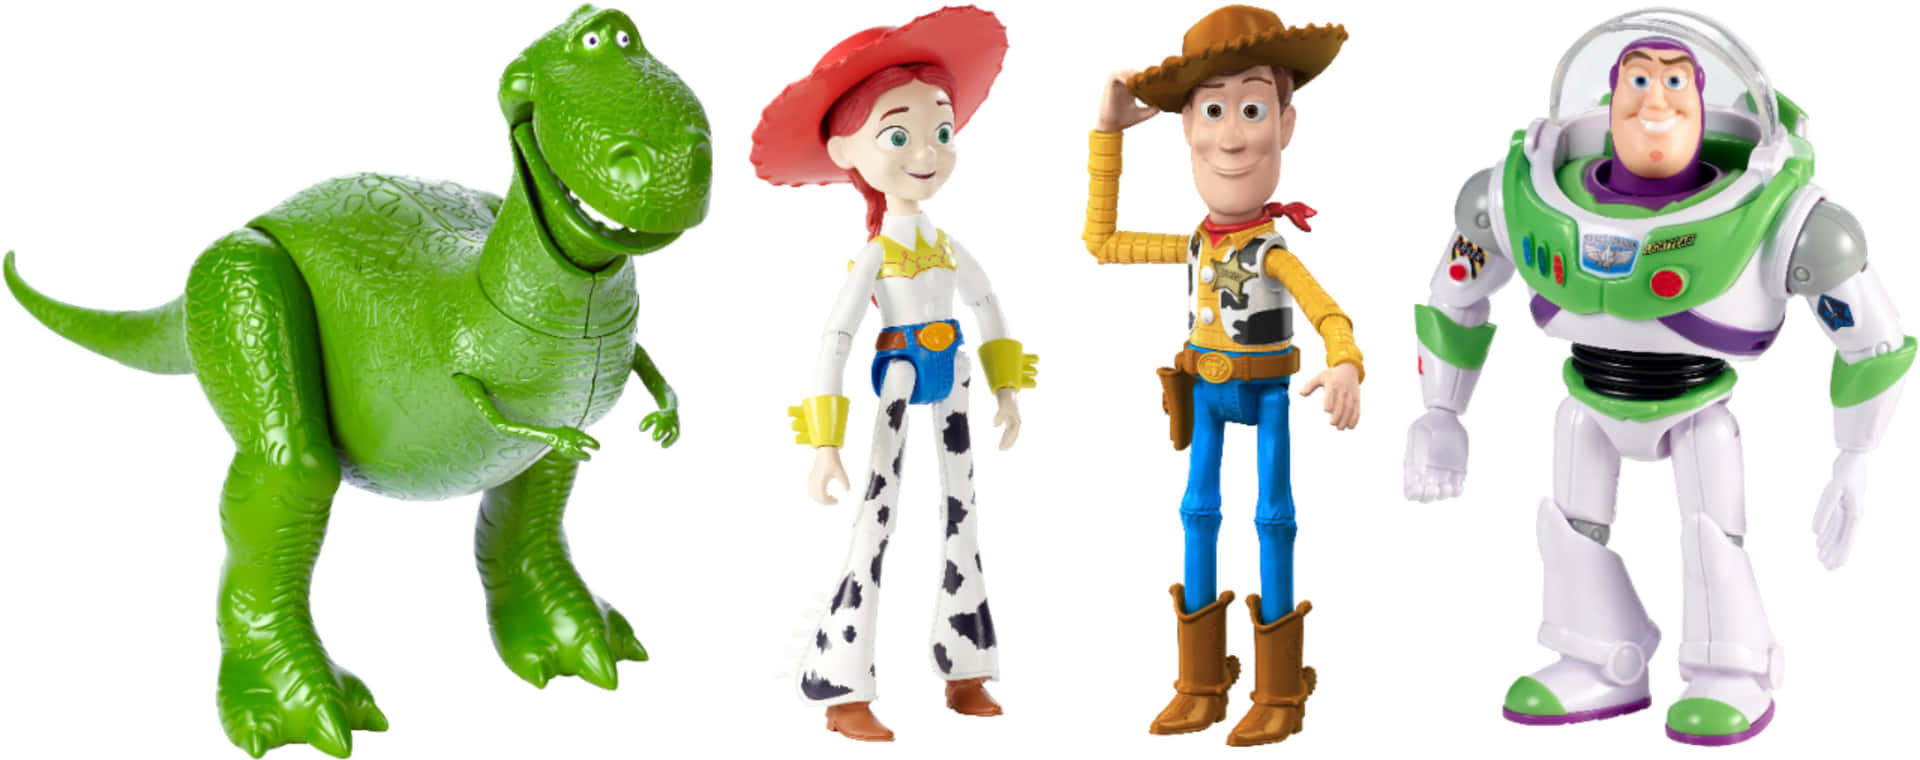 Woody,buzz E Bo Peep Riuniti Nel Mondo Di Toy Story 4